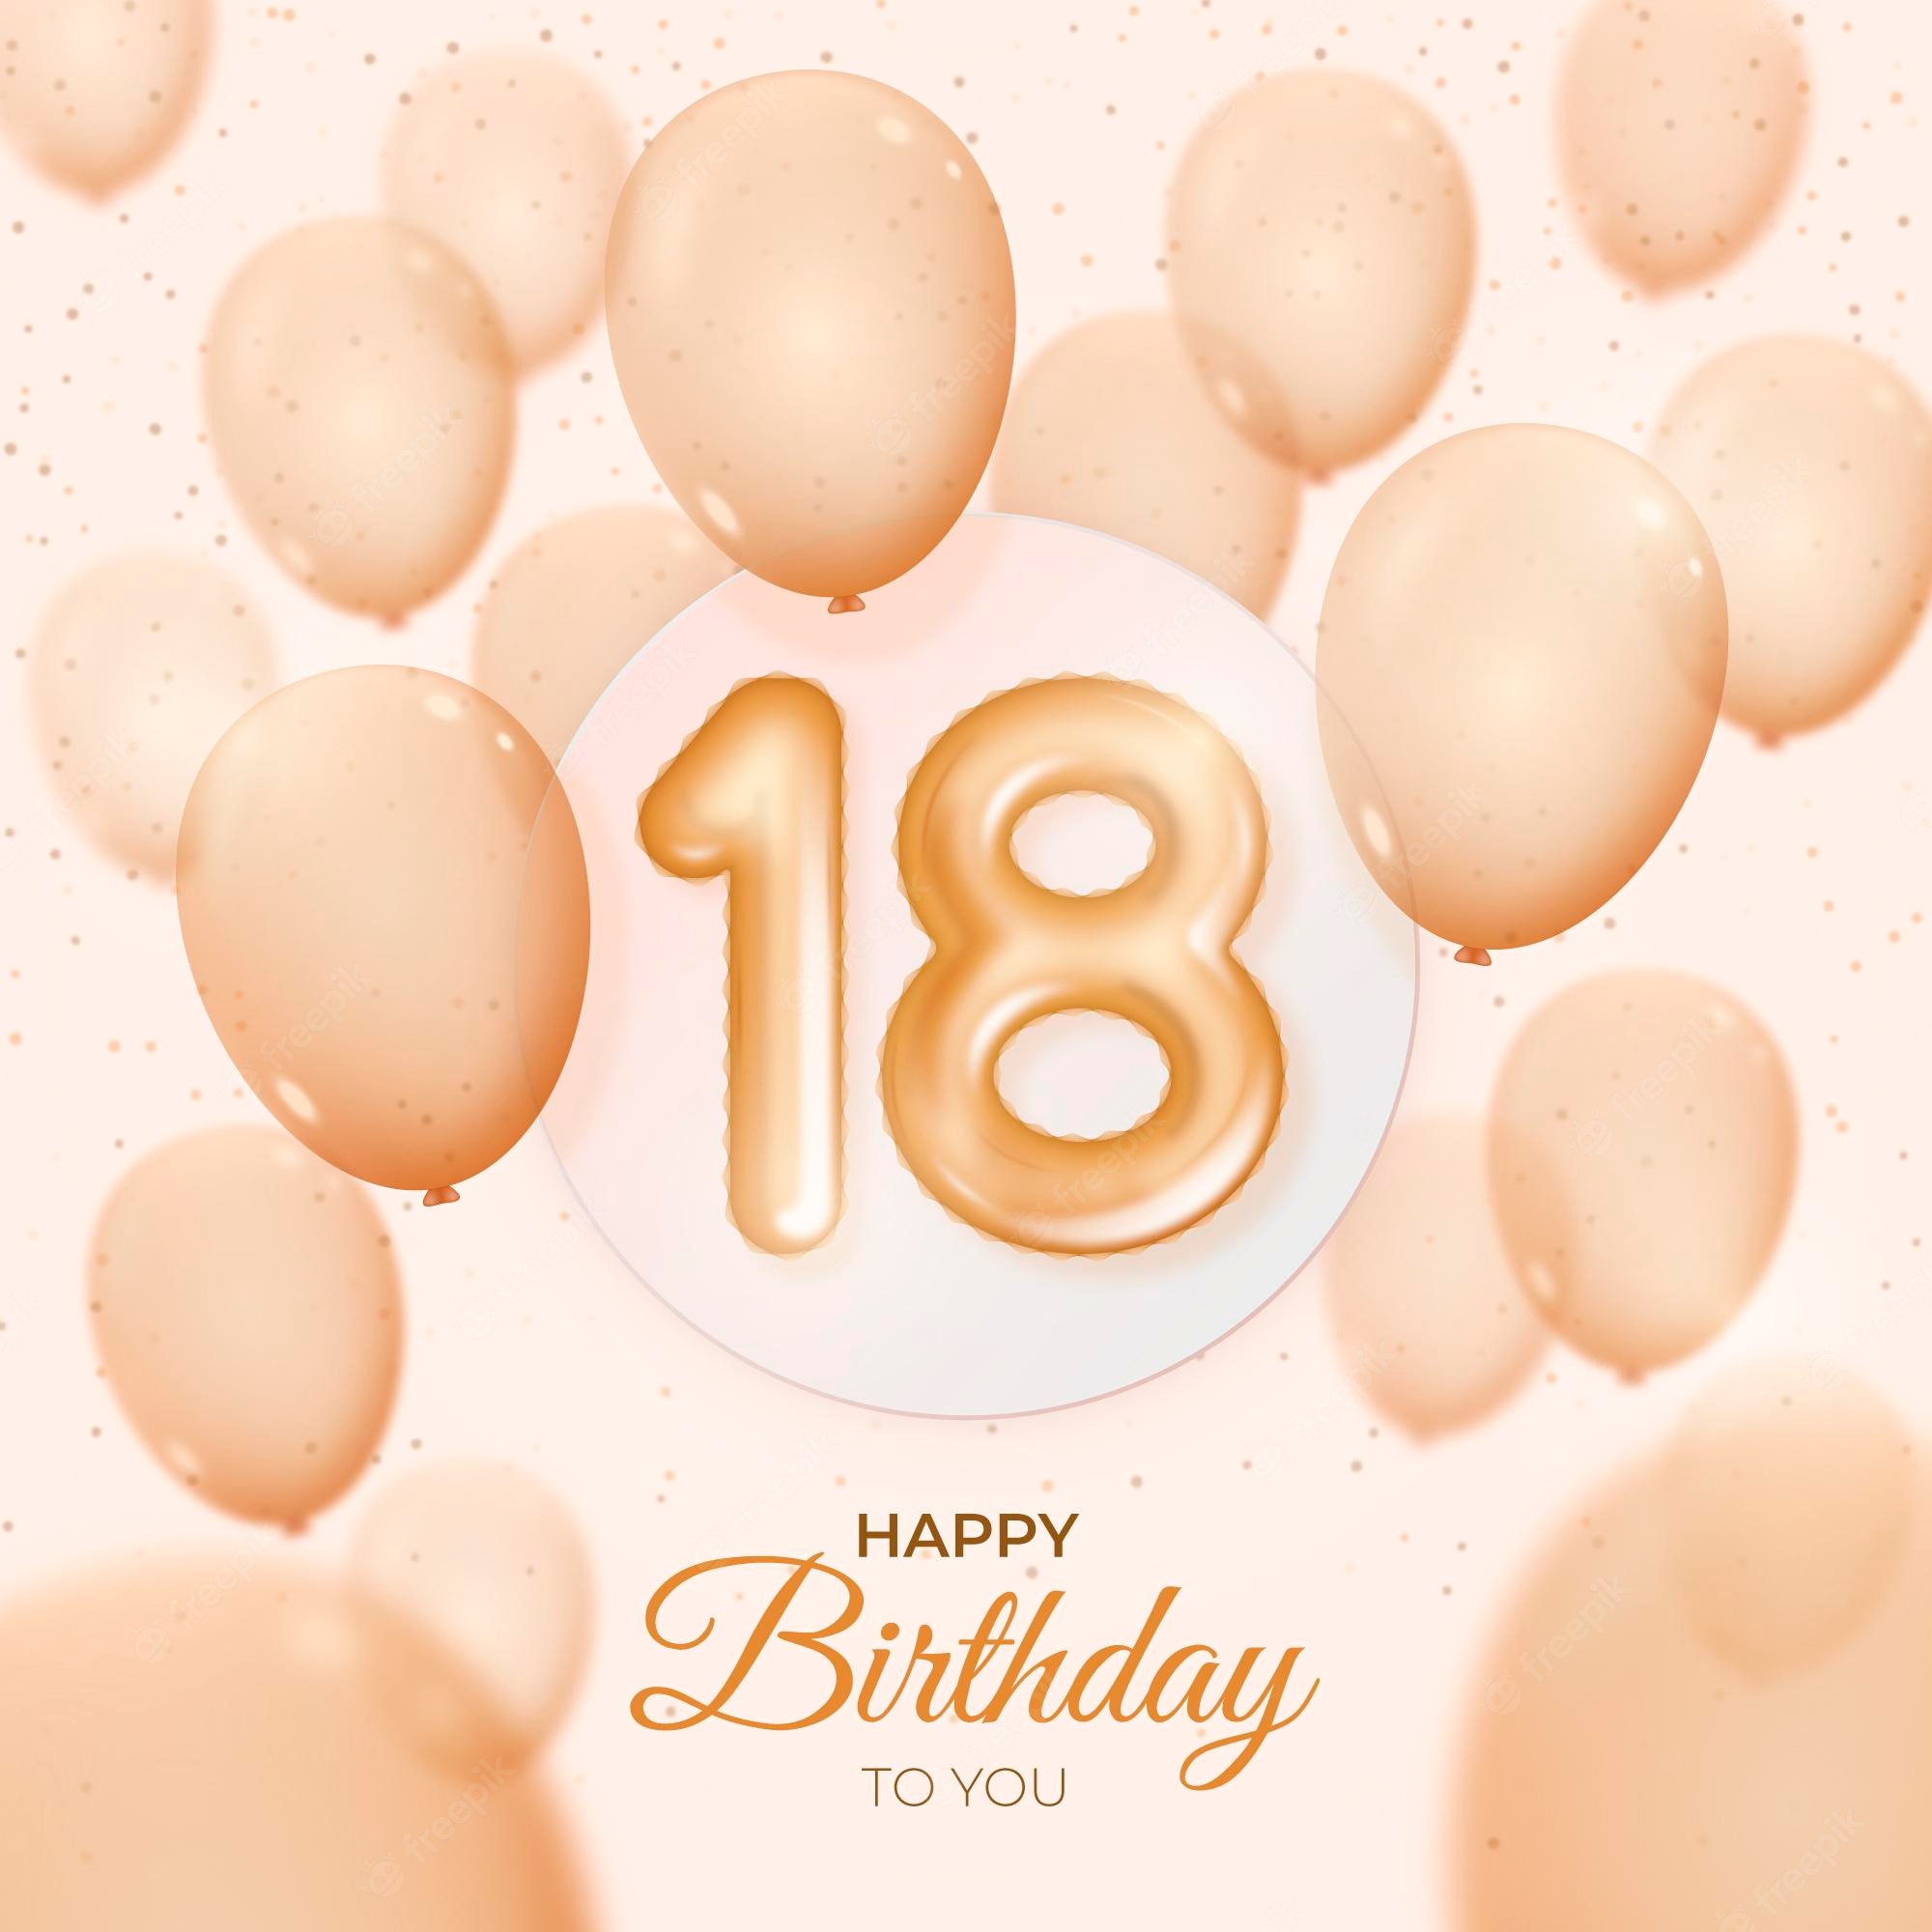 18th birthday celebration with gold balloons on a light orange background - Birthday, 18